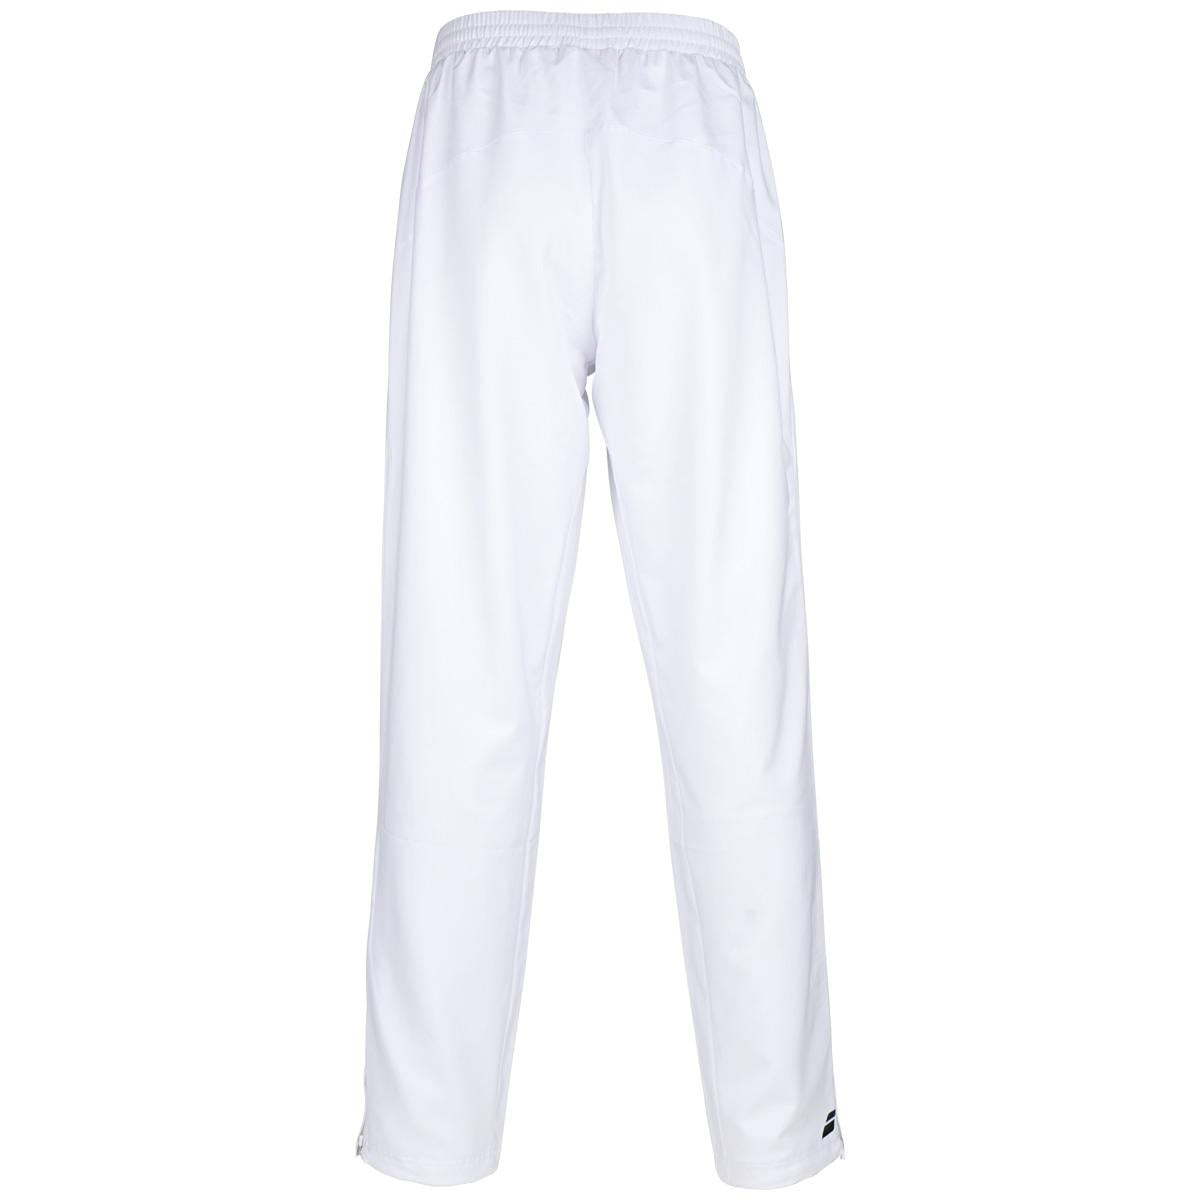 Babolat Mens Match Core Pants (White)